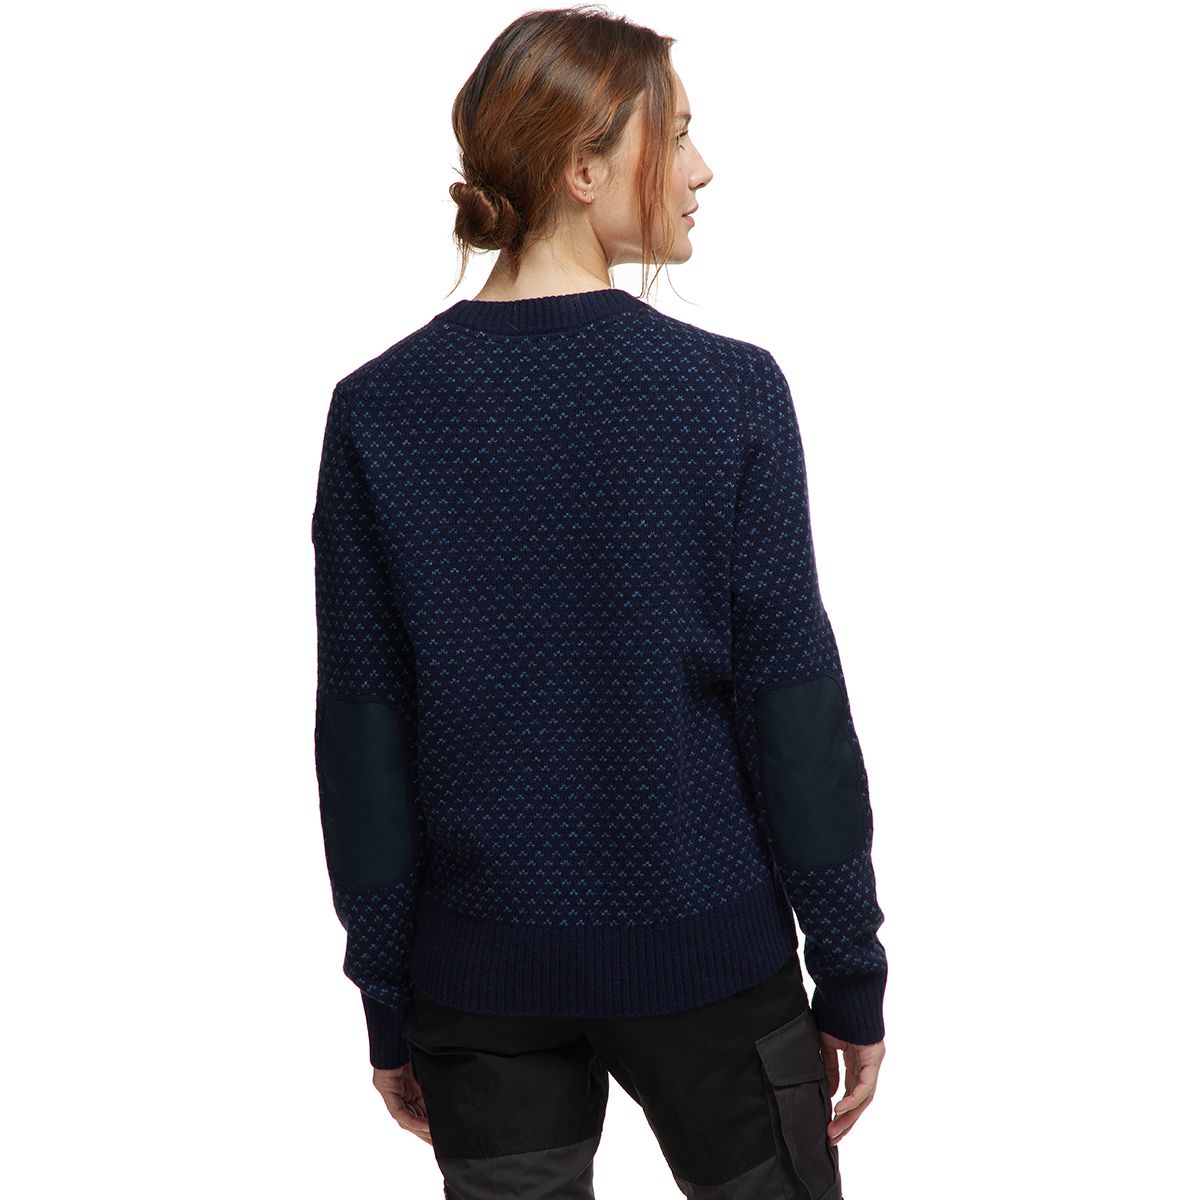 Fjallraven Ovik Nordic Sweater - Women's | eBay